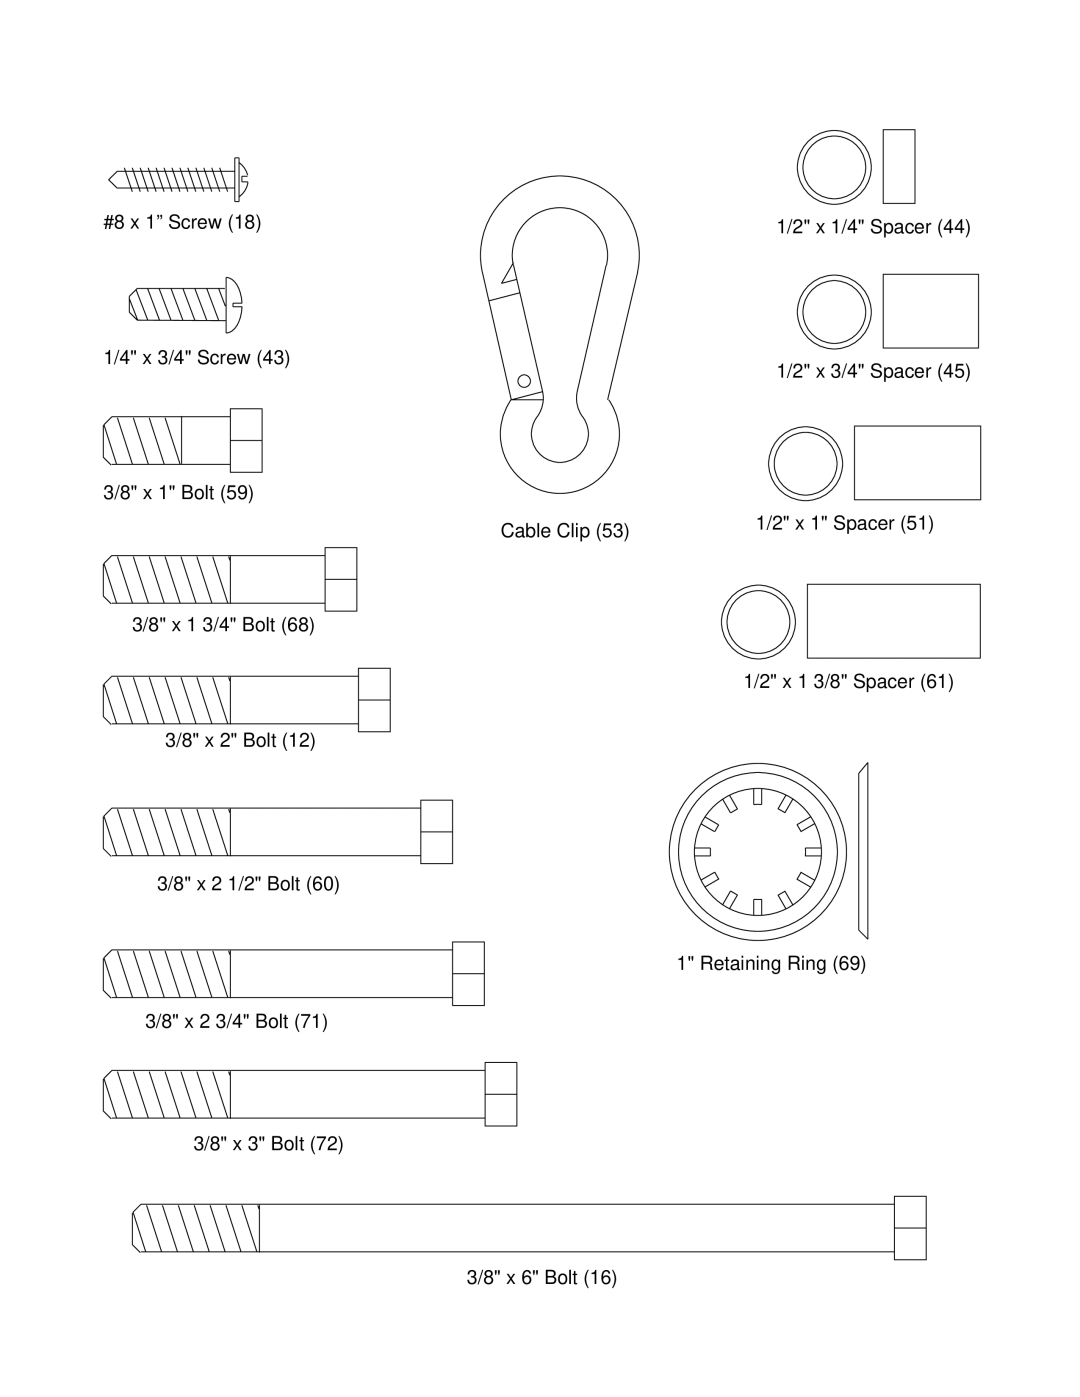 Weider 740 user manual #8 x 1” Screw 1/4 x 3/4 Screw 3/8 x 1 Bolt Cable Clip, 3/8 x 1 3/4 Bolt 3/8 x 2 Bolt, 3/8 x 6 Bolt 